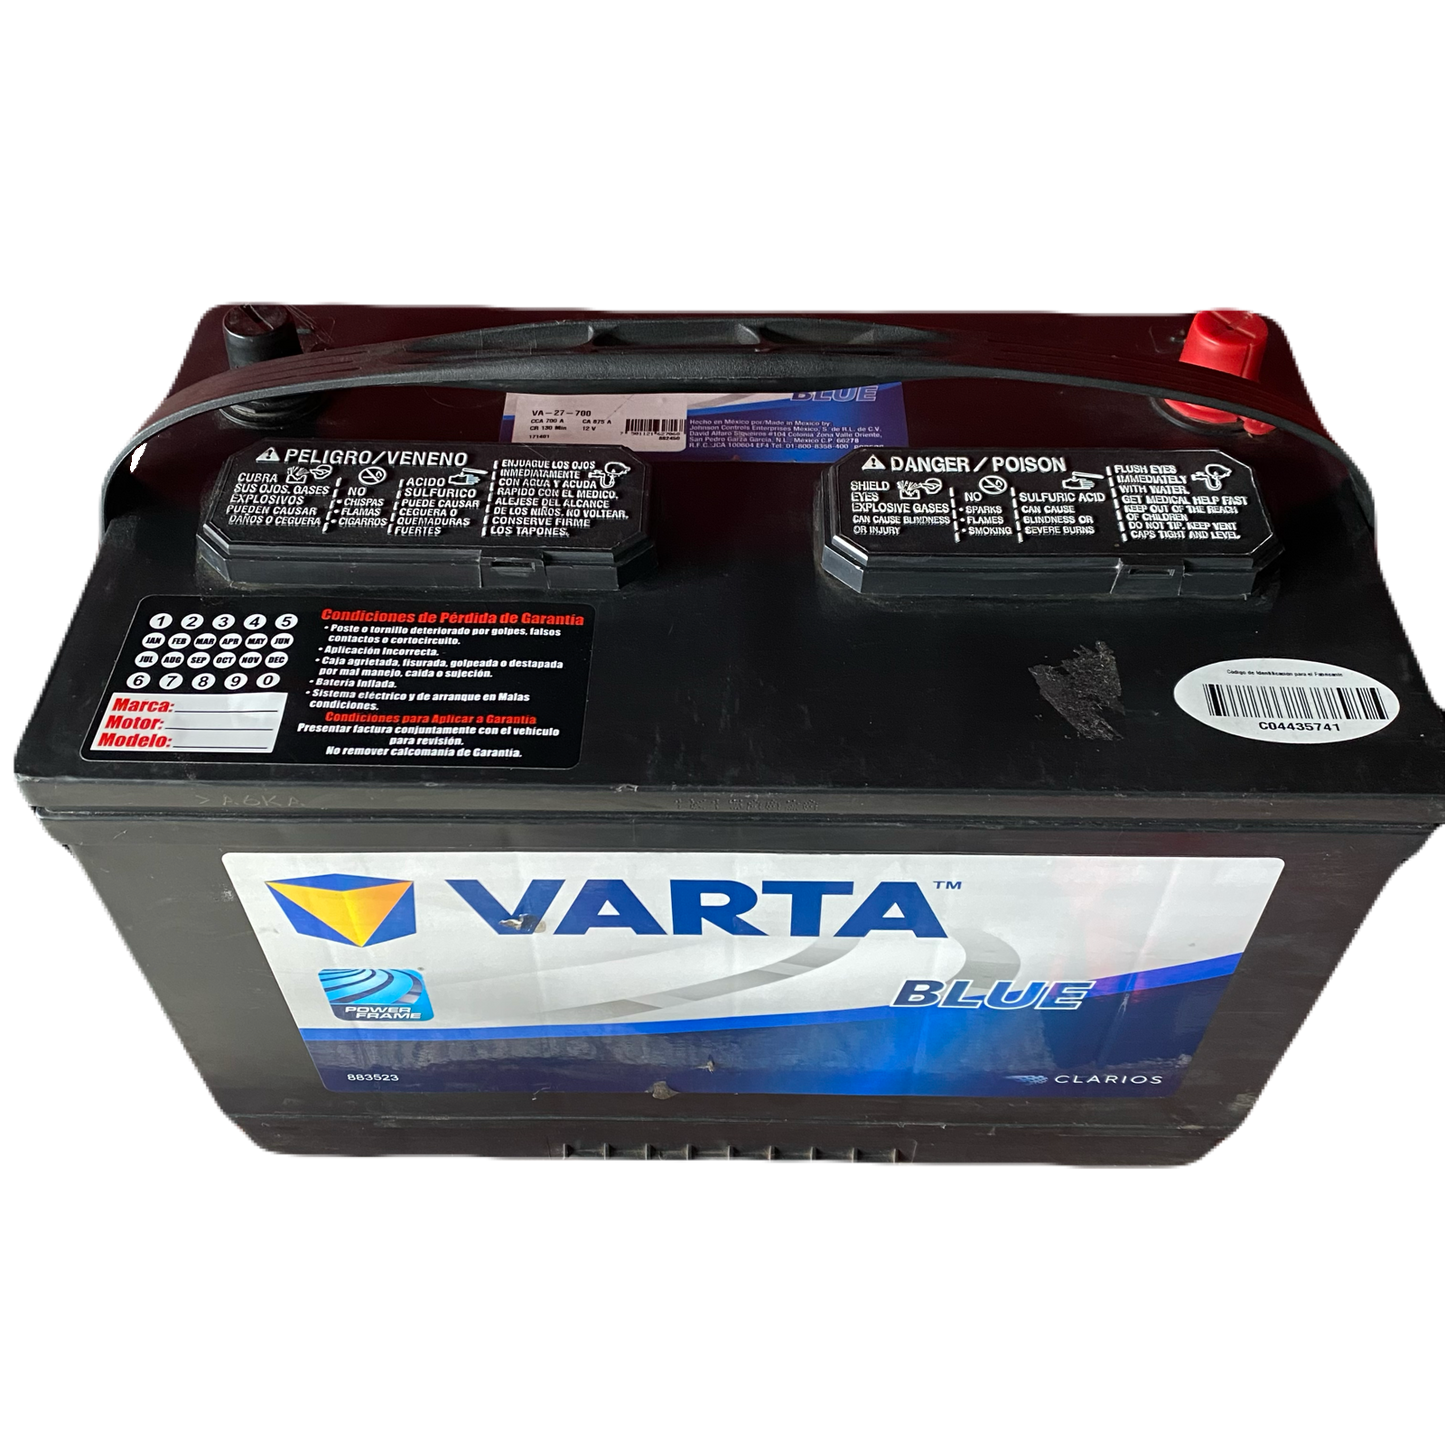 Batería para carro o camión Varta 27-700 / 27F-700